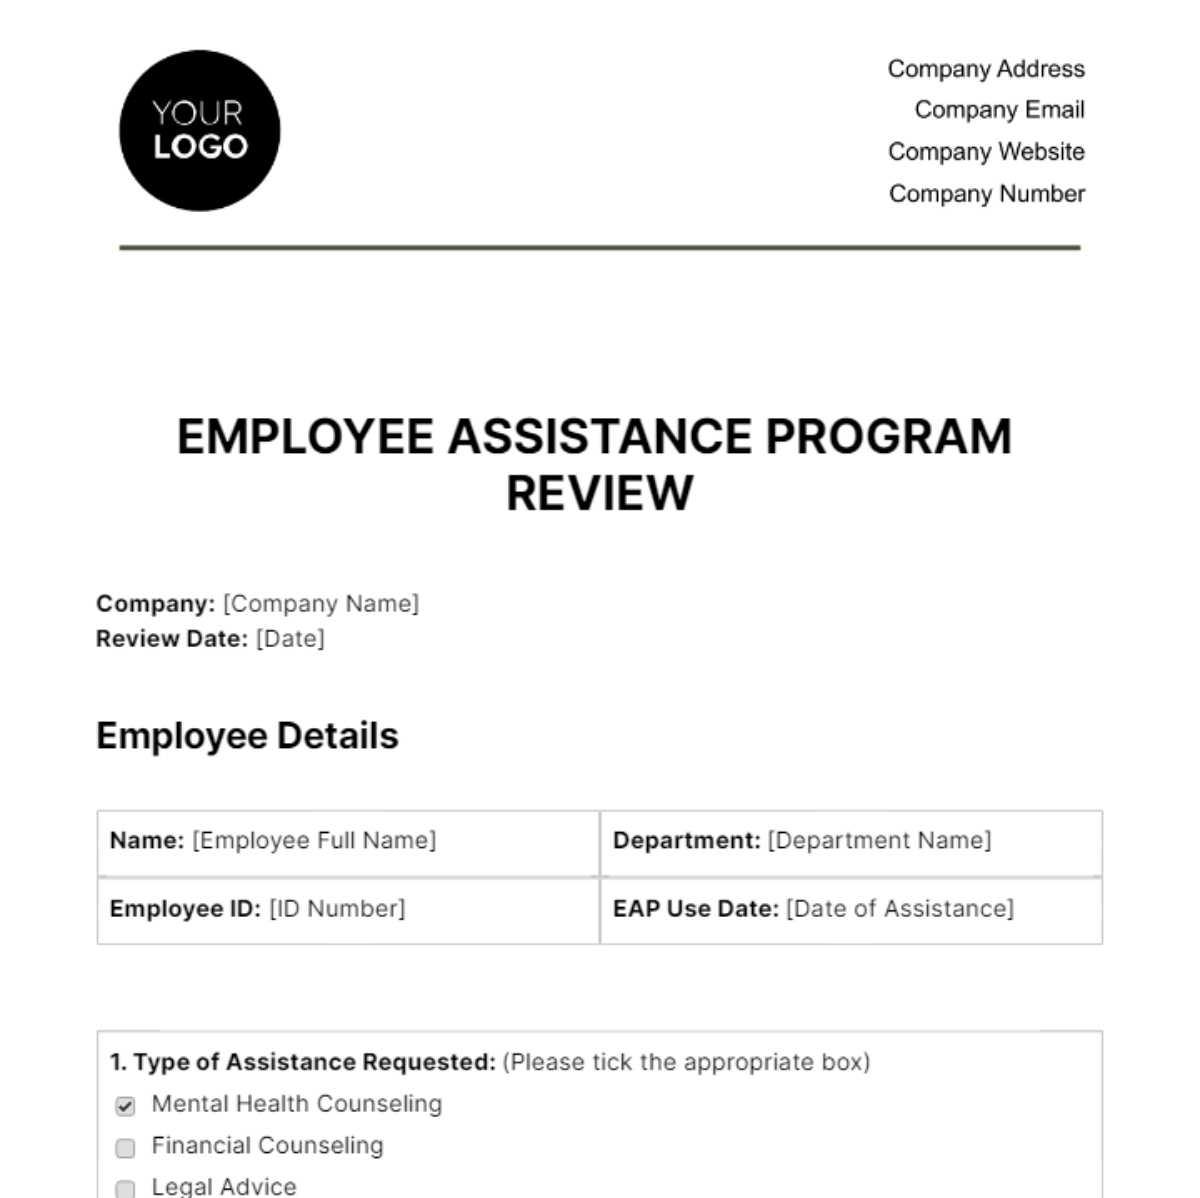 Employee Assistance Program Review HR Template